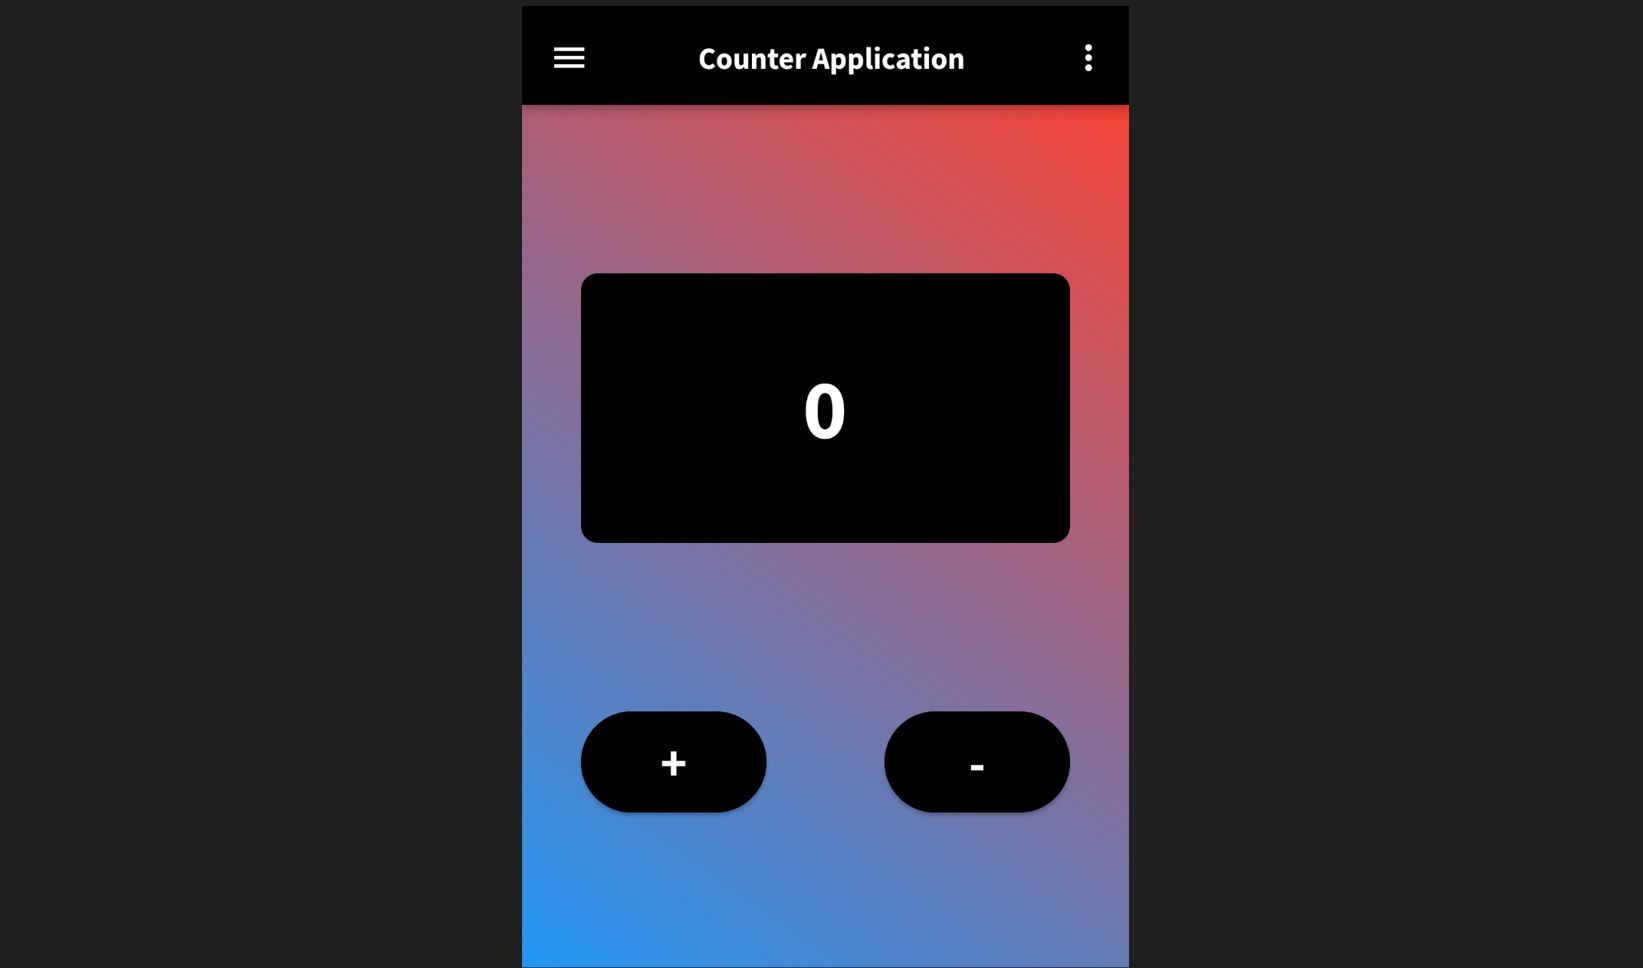 Counter Application